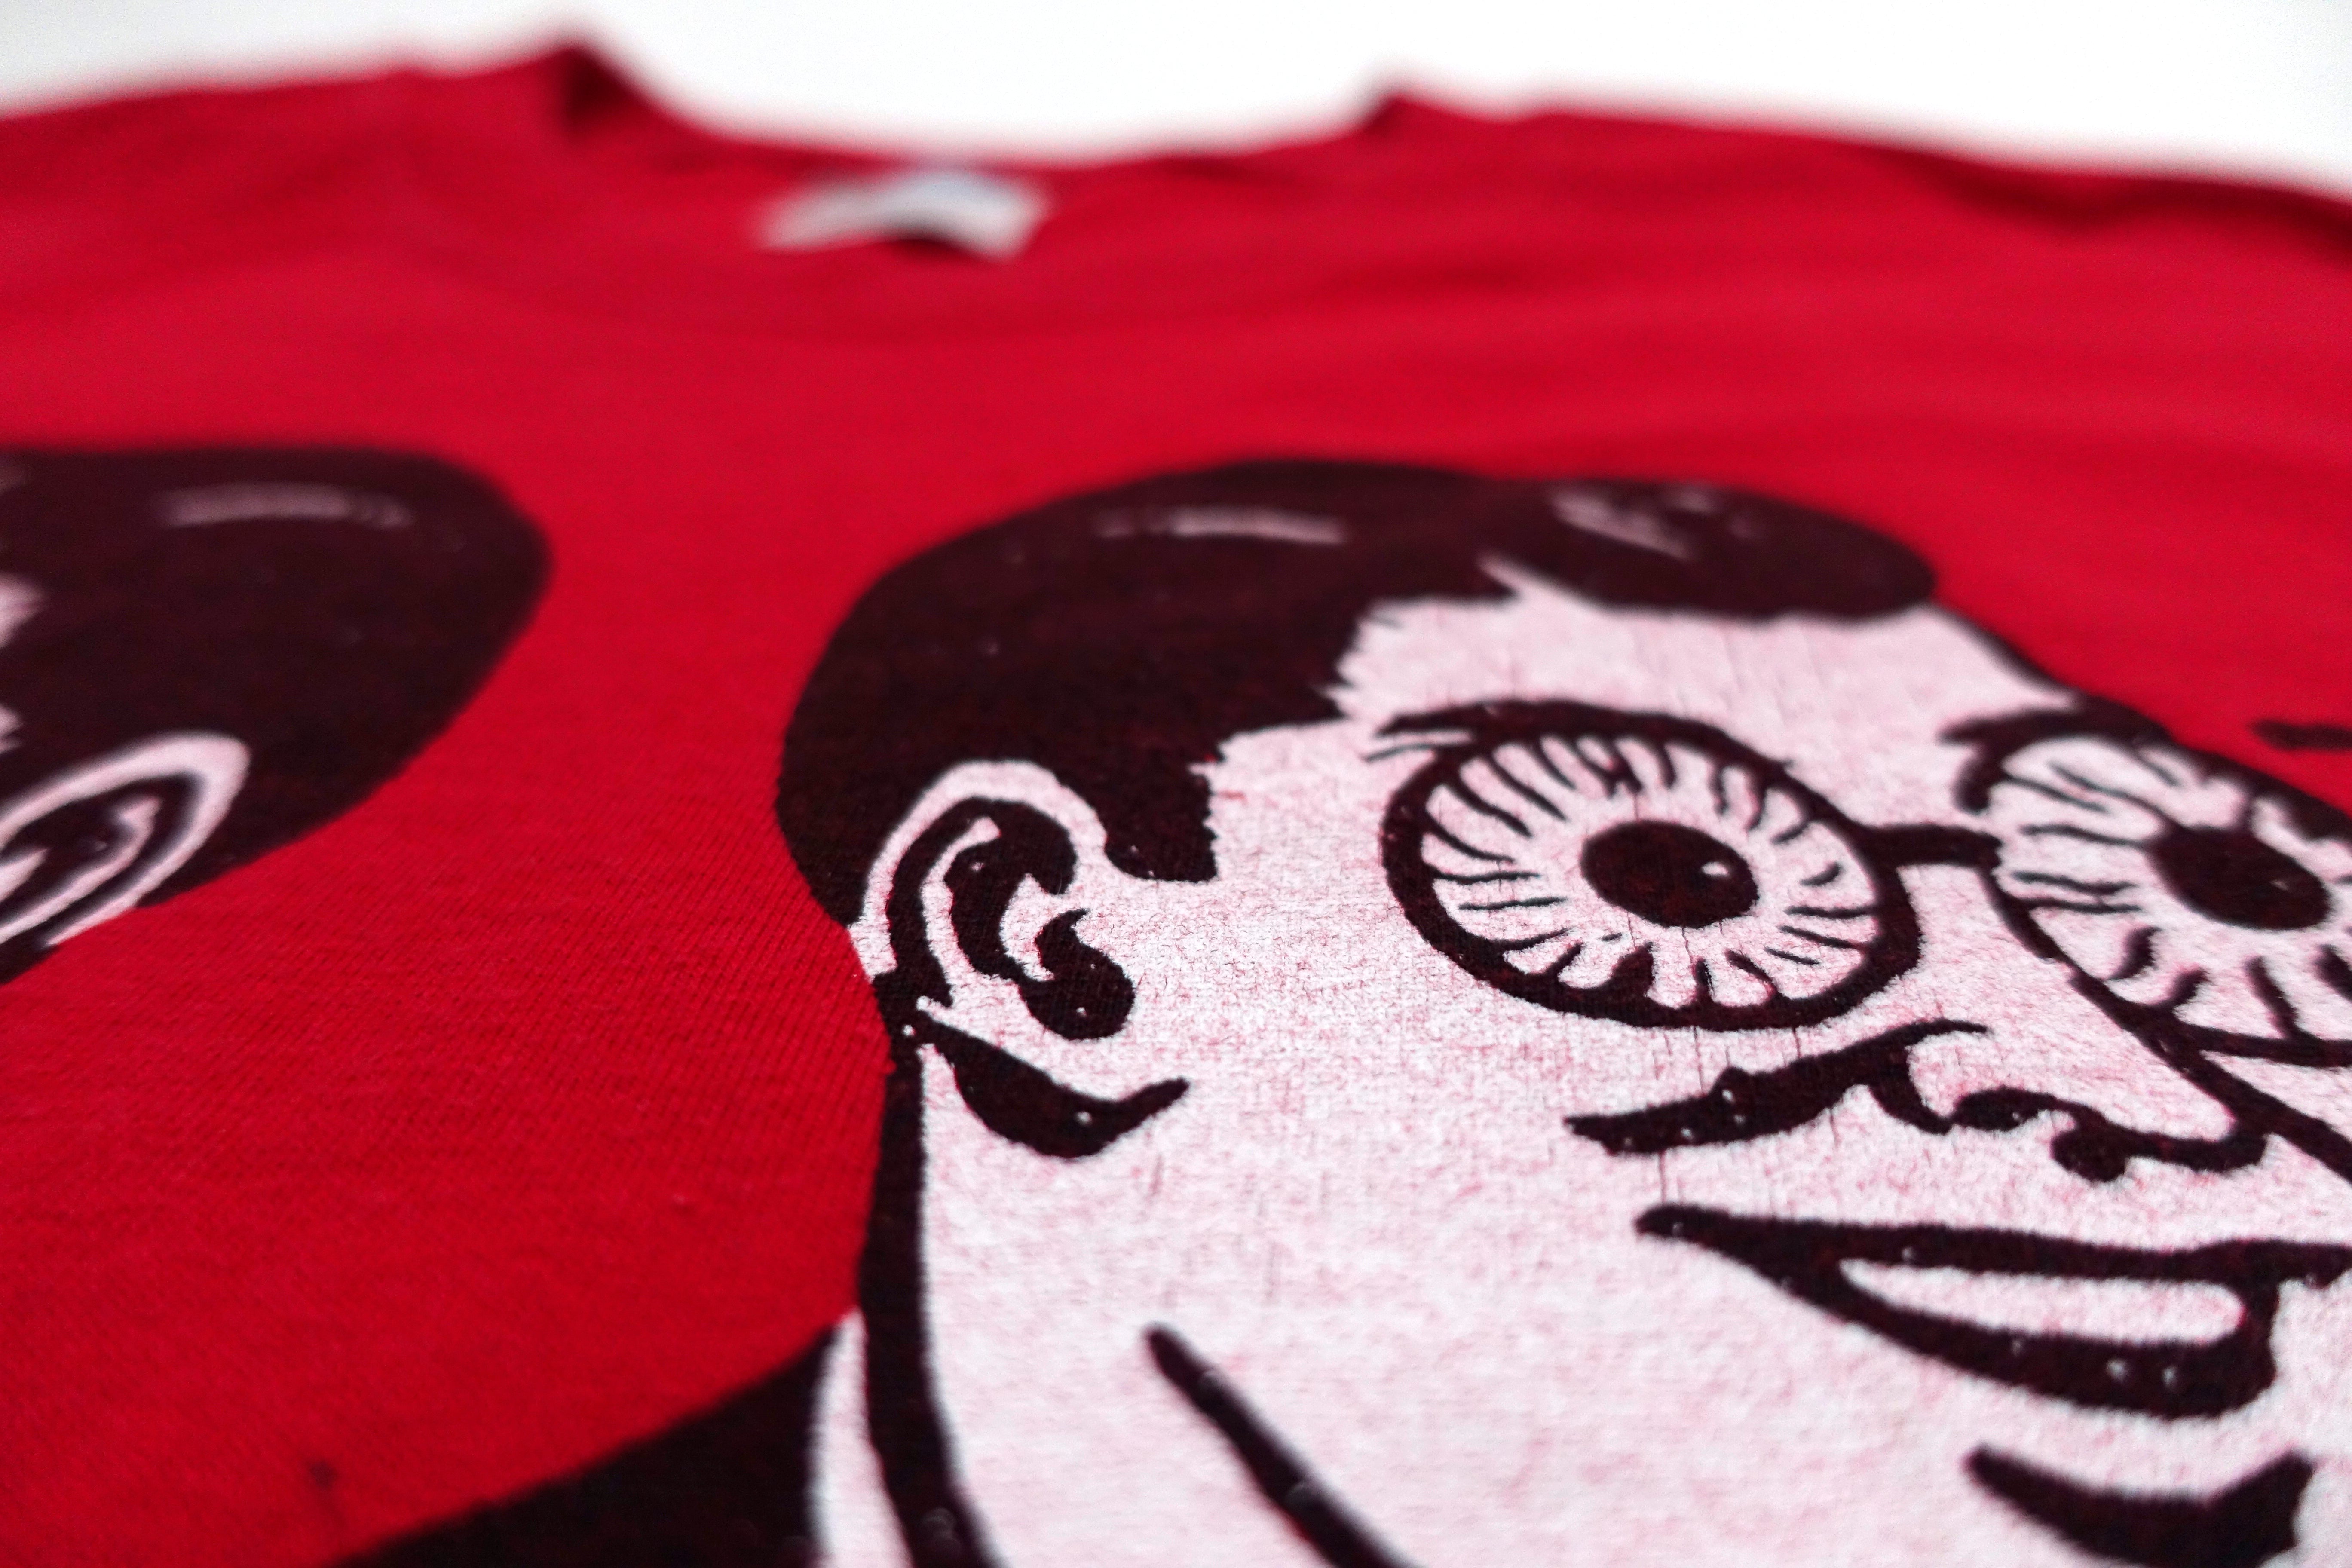 Reggie And The Full Effect - Bug Eyes Tour Shirt Size Large